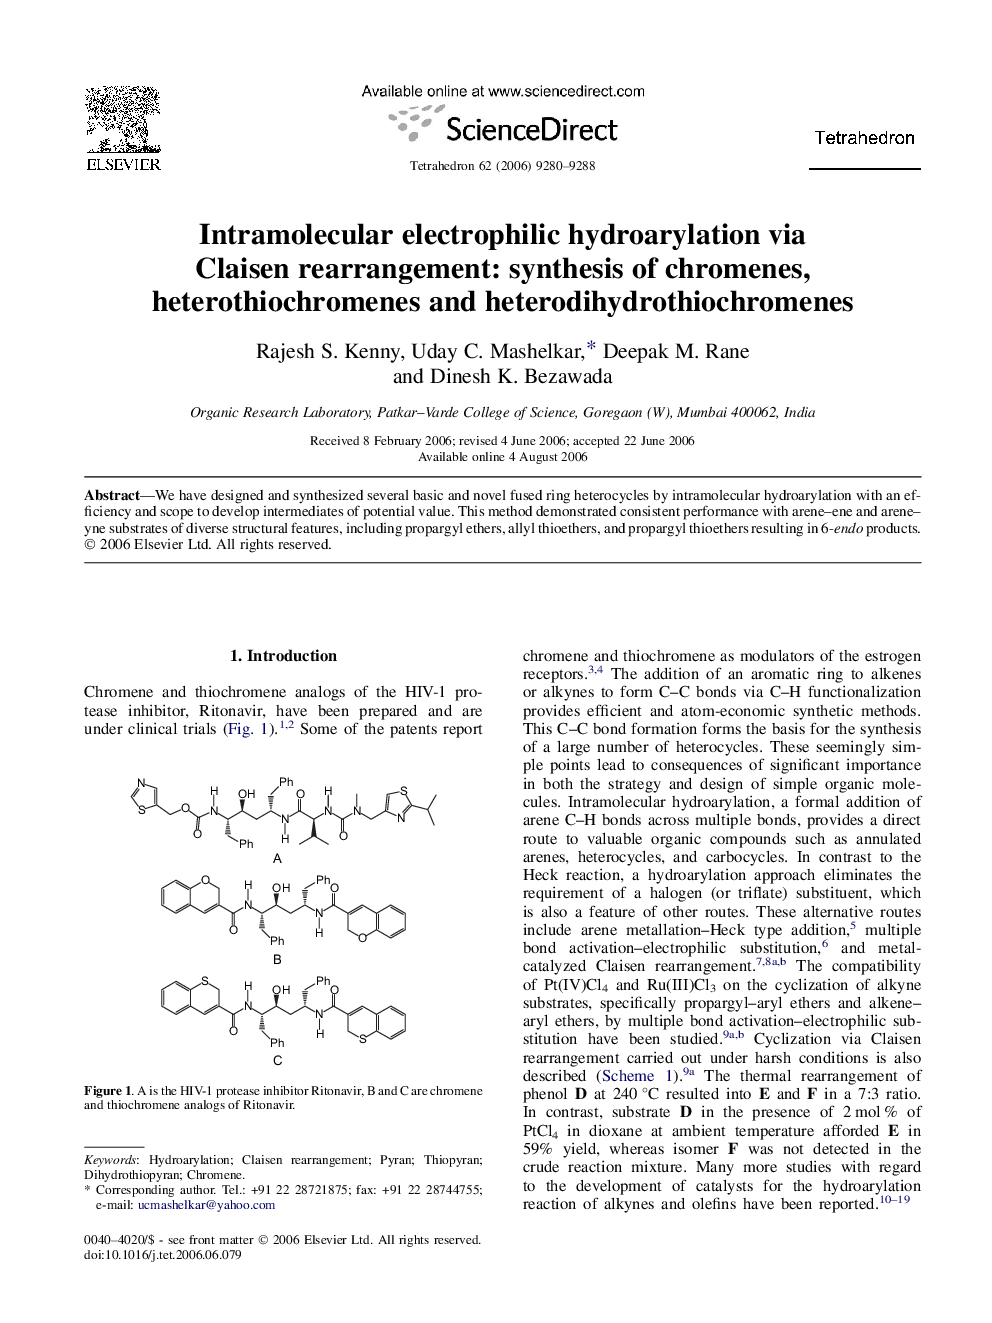 Intramolecular electrophilic hydroarylation via Claisen rearrangement: synthesis of chromenes, heterothiochromenes and heterodihydrothiochromenes